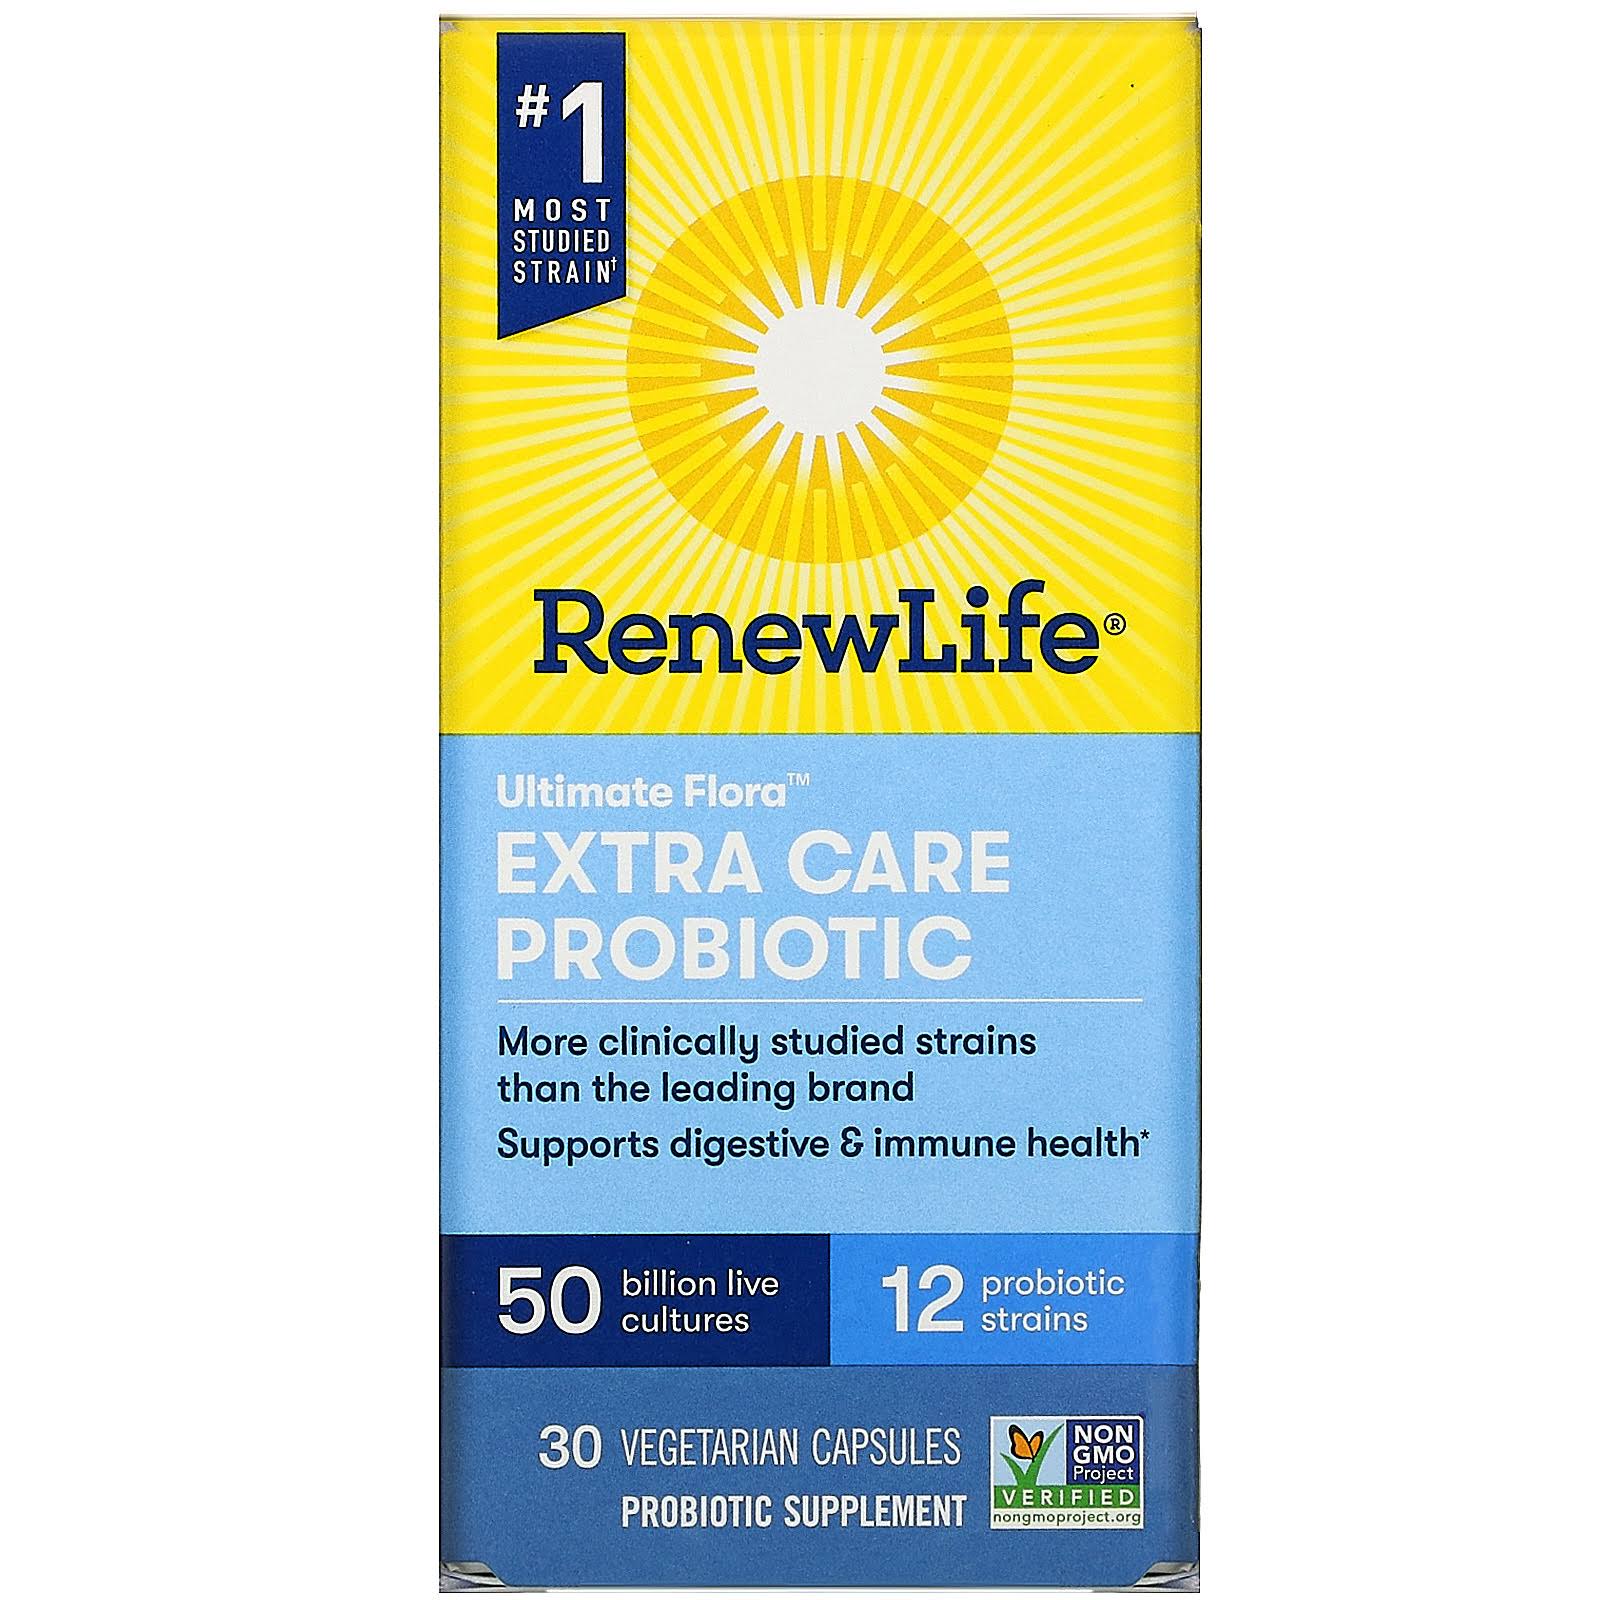 Renew Life Extra Care Probiotic, Ultimate Flora, Vegetarian Capsules - 30 vegetarian capsules